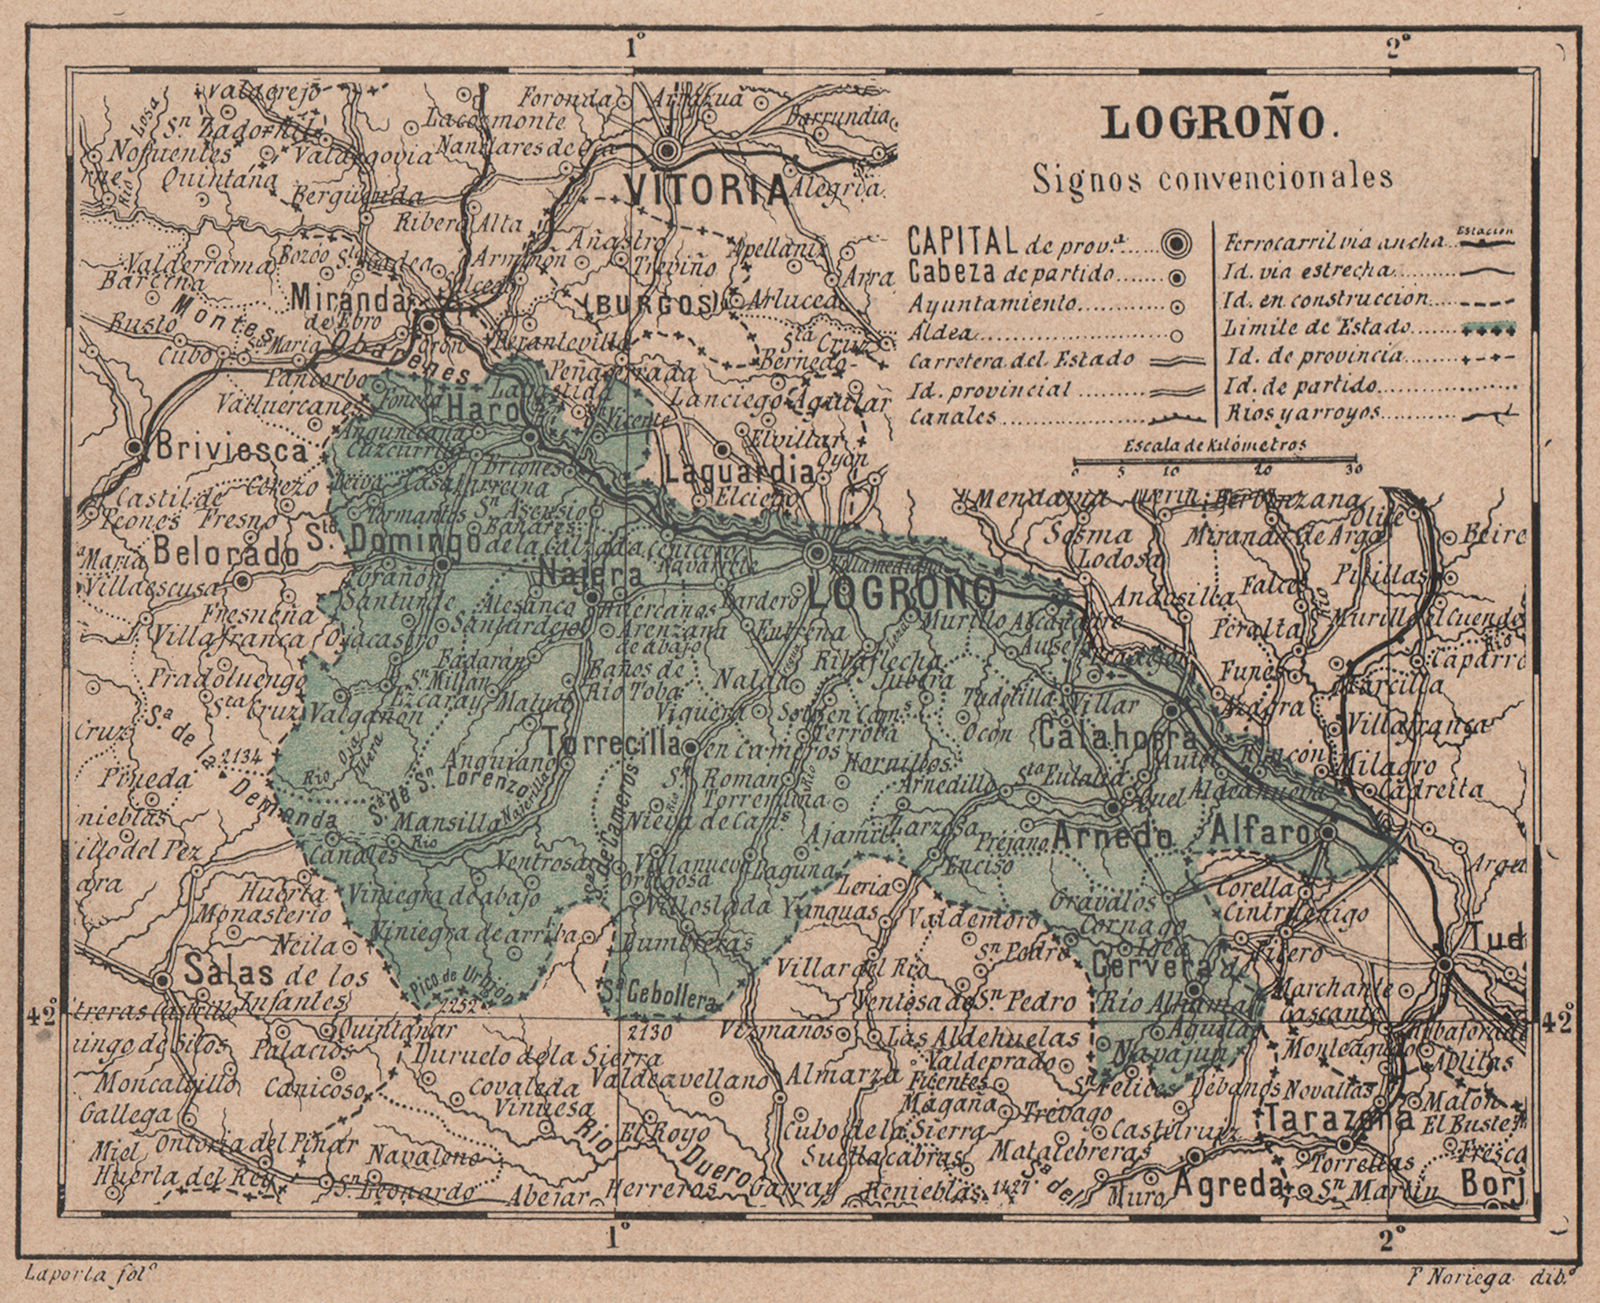 Associate Product LA RIOJA. Logroño Logrono. Mapa antiguo de la provincia 1908 old antique